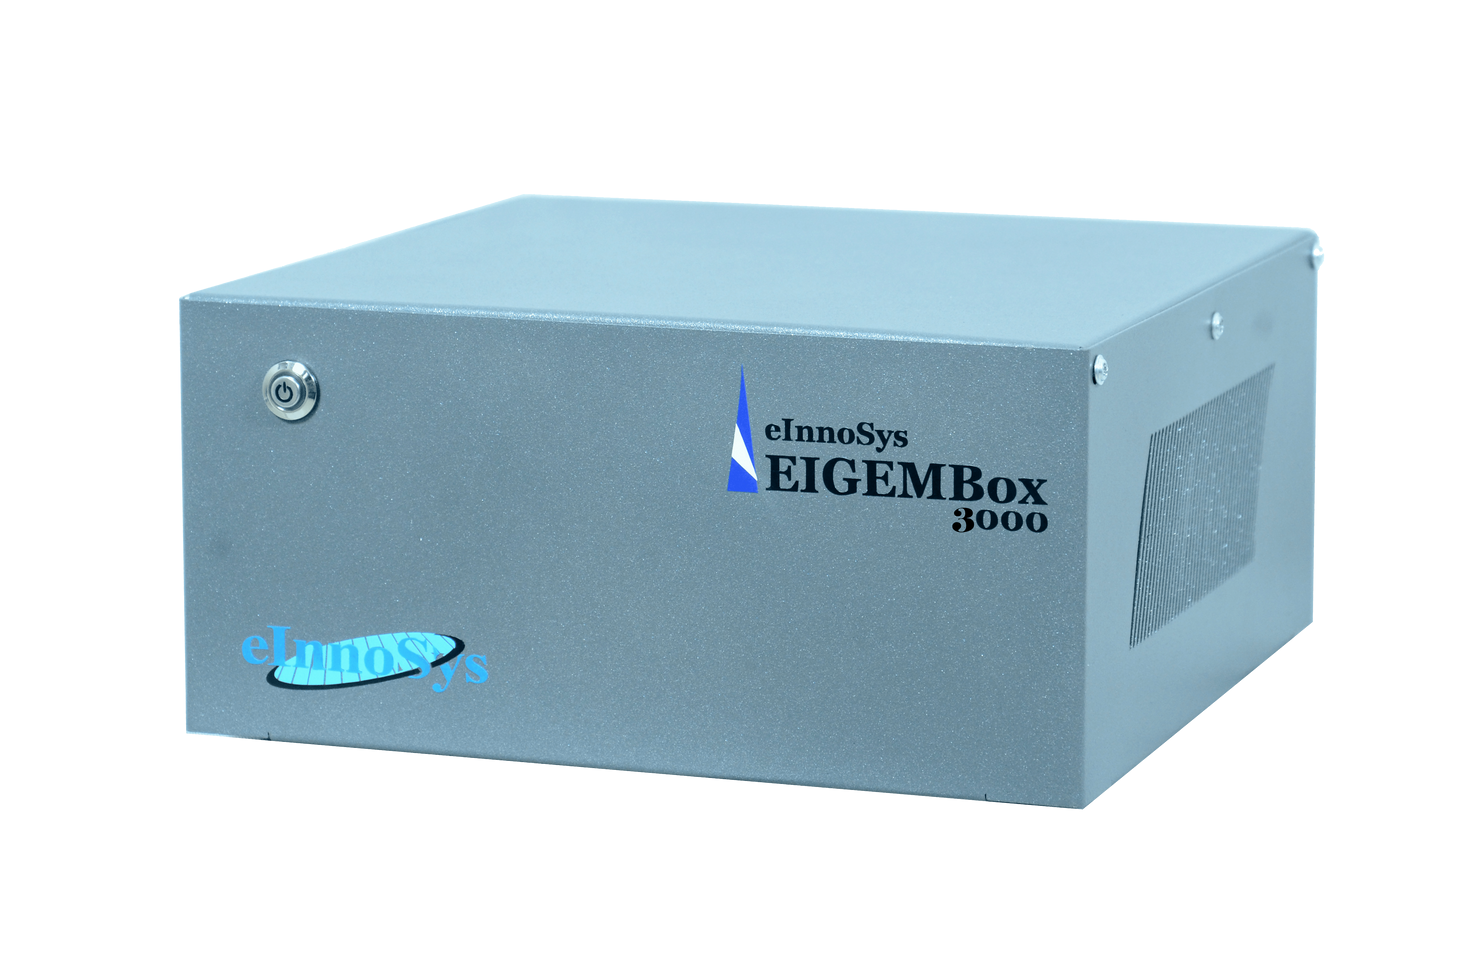 IGEMBox3000 - SECS/GEM for Old/Legacy Equipment